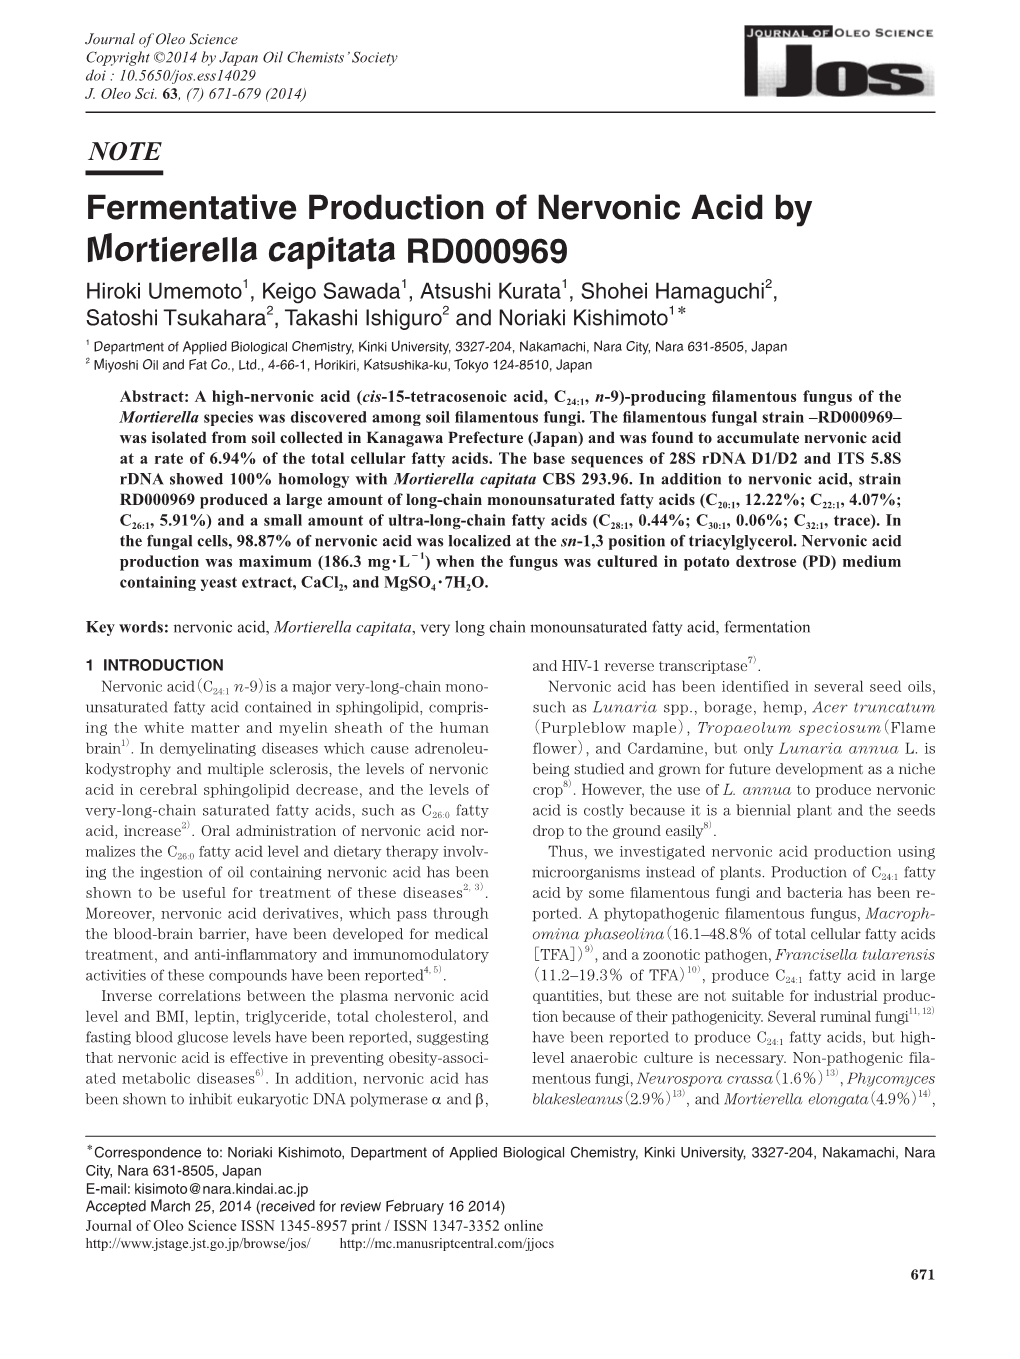 Fermentative Production of Nervonic Acid by Mortierella Capitata